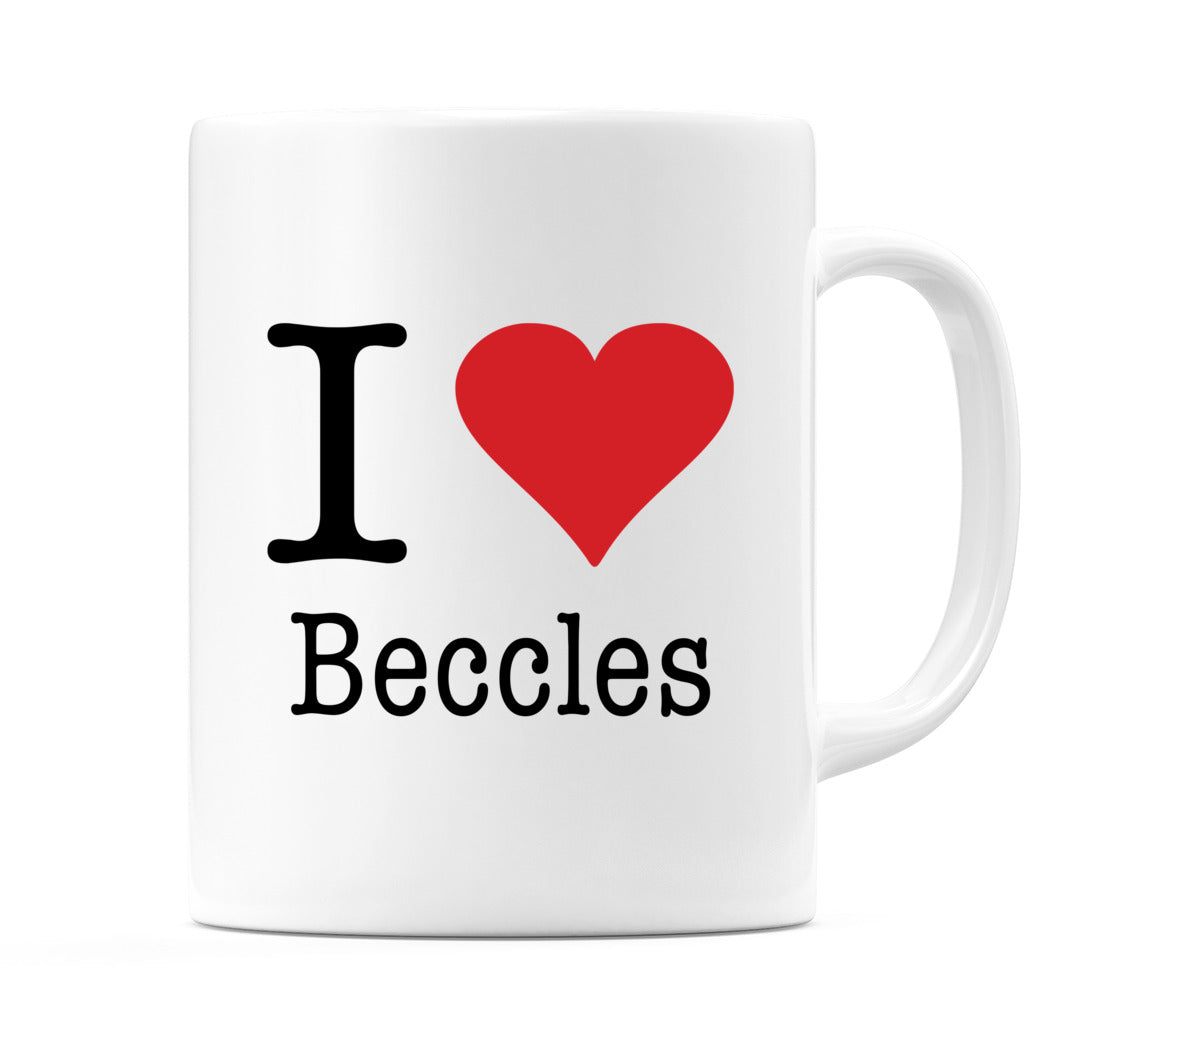 I Love Beccles Mug